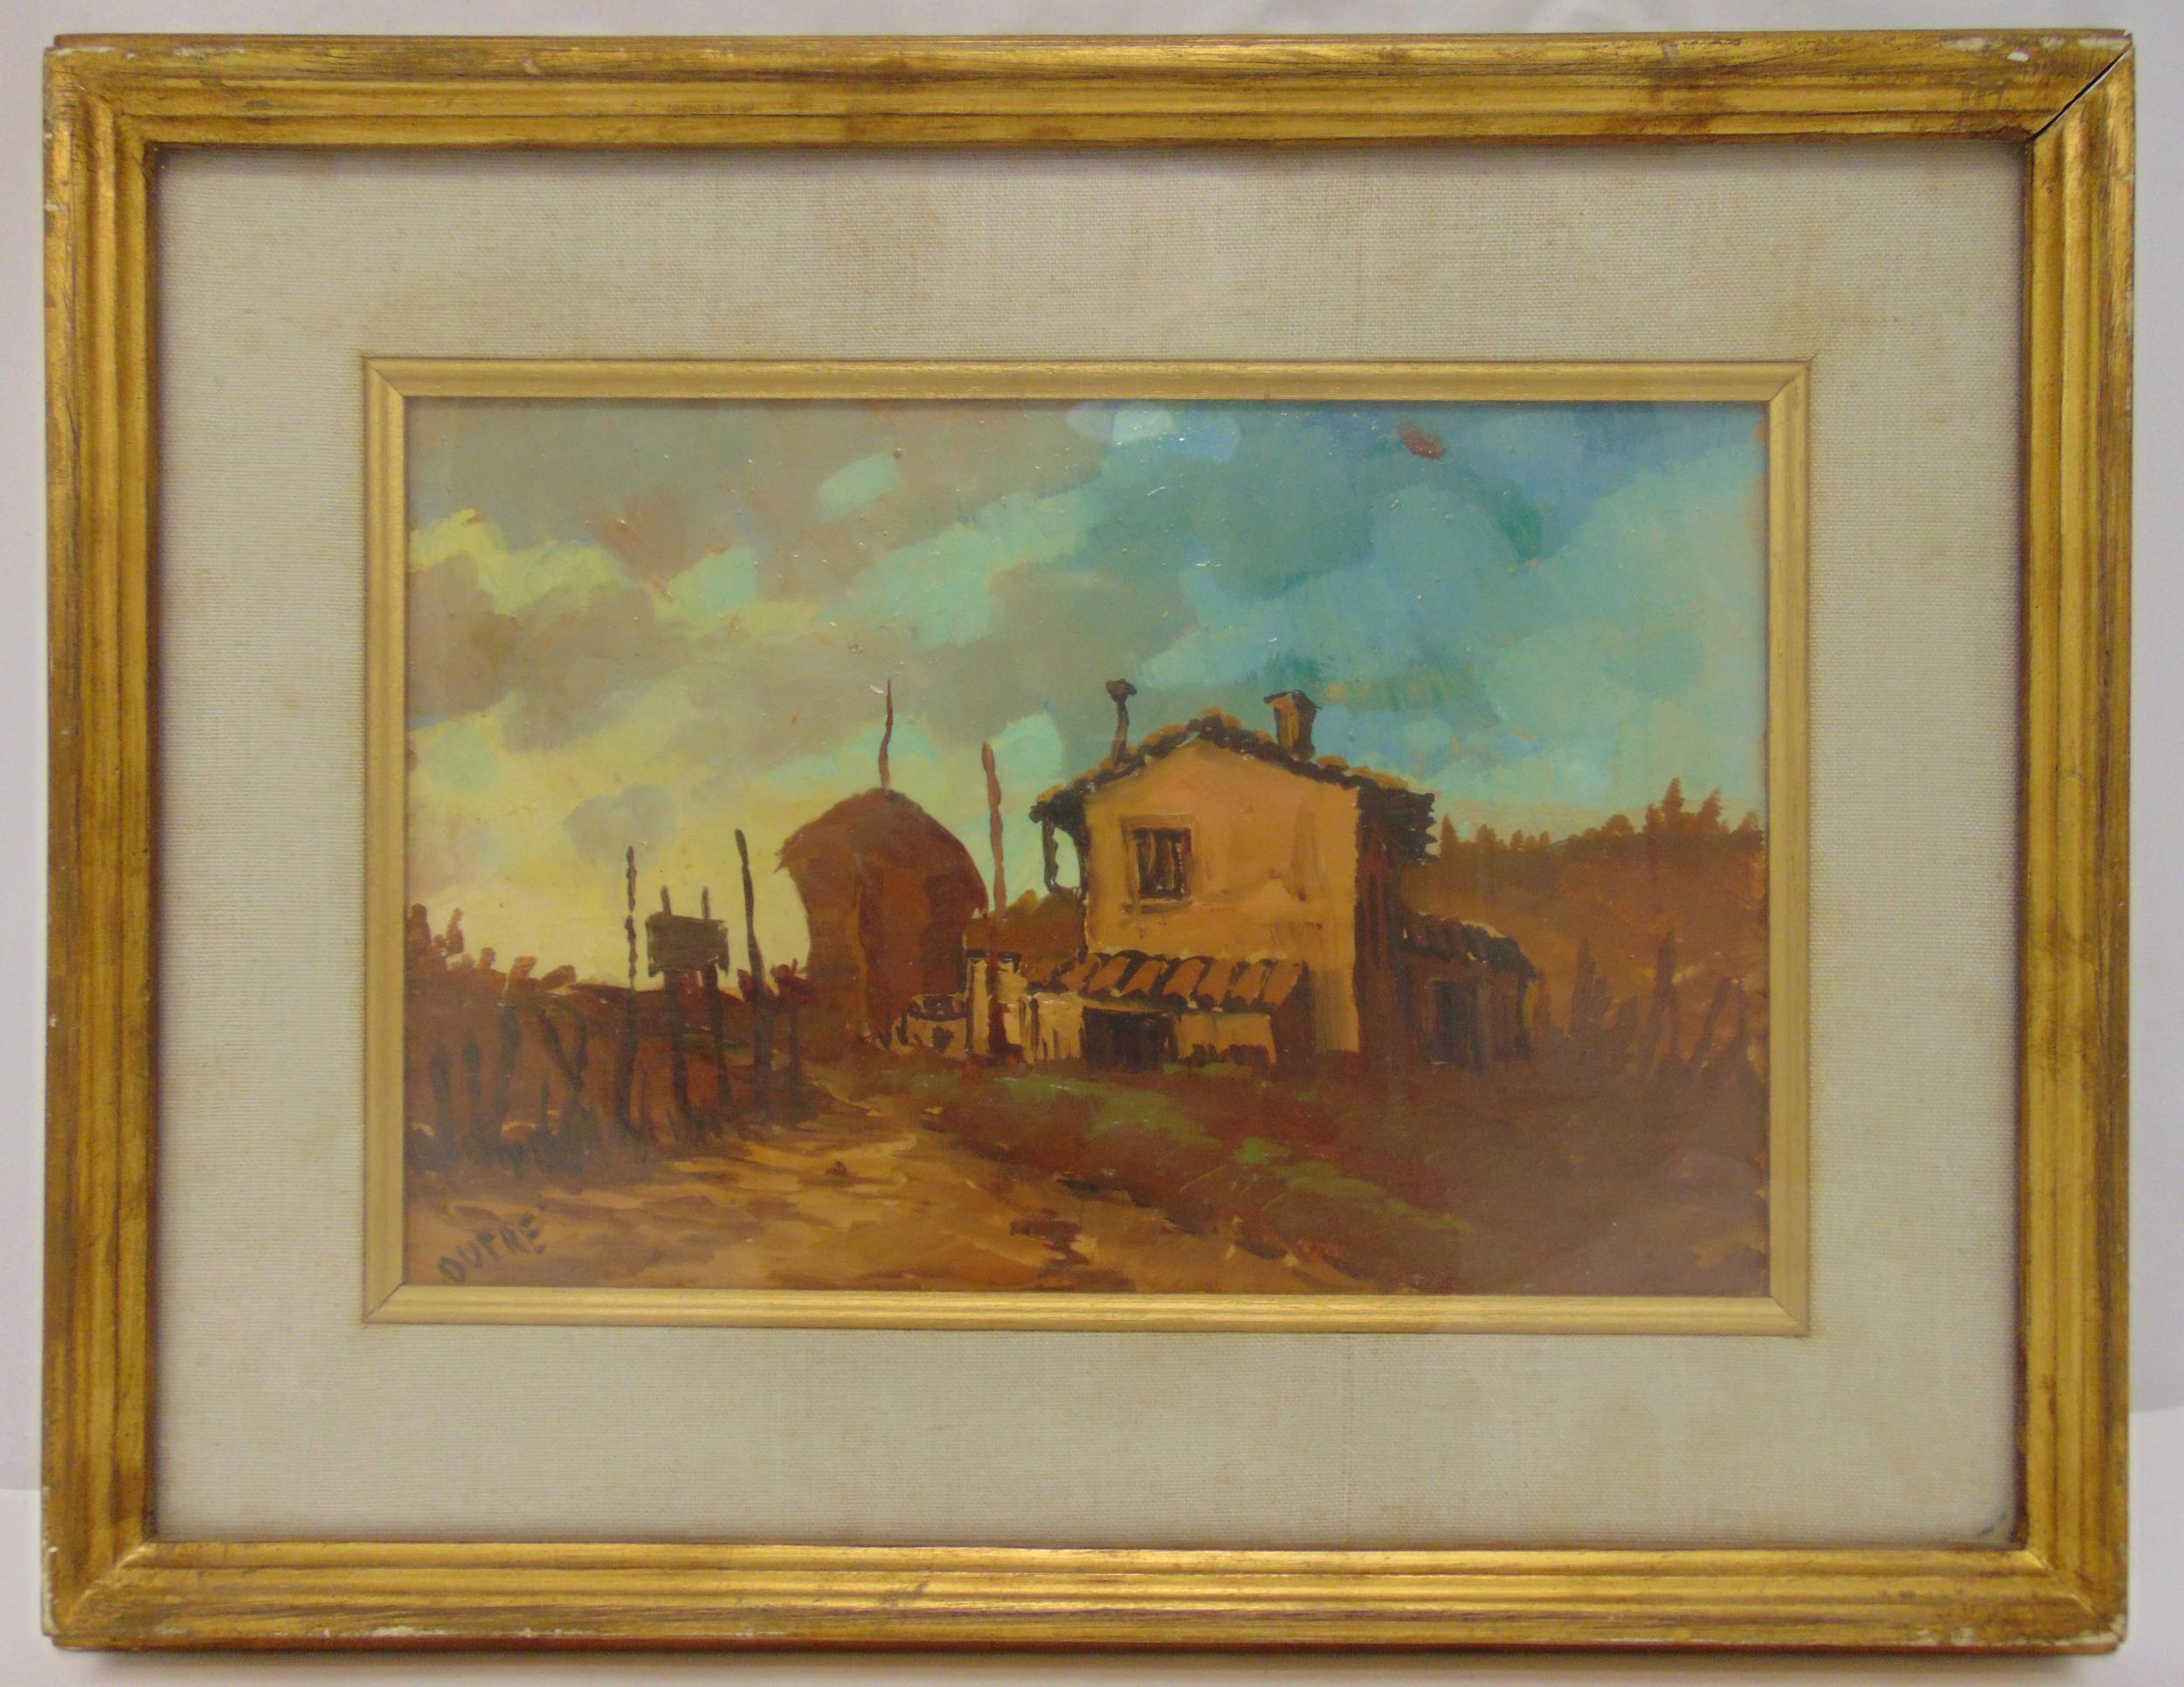 Dupre framed and glazed oil on panel of a farmhouse, signed bottom left, 19 x 29cm